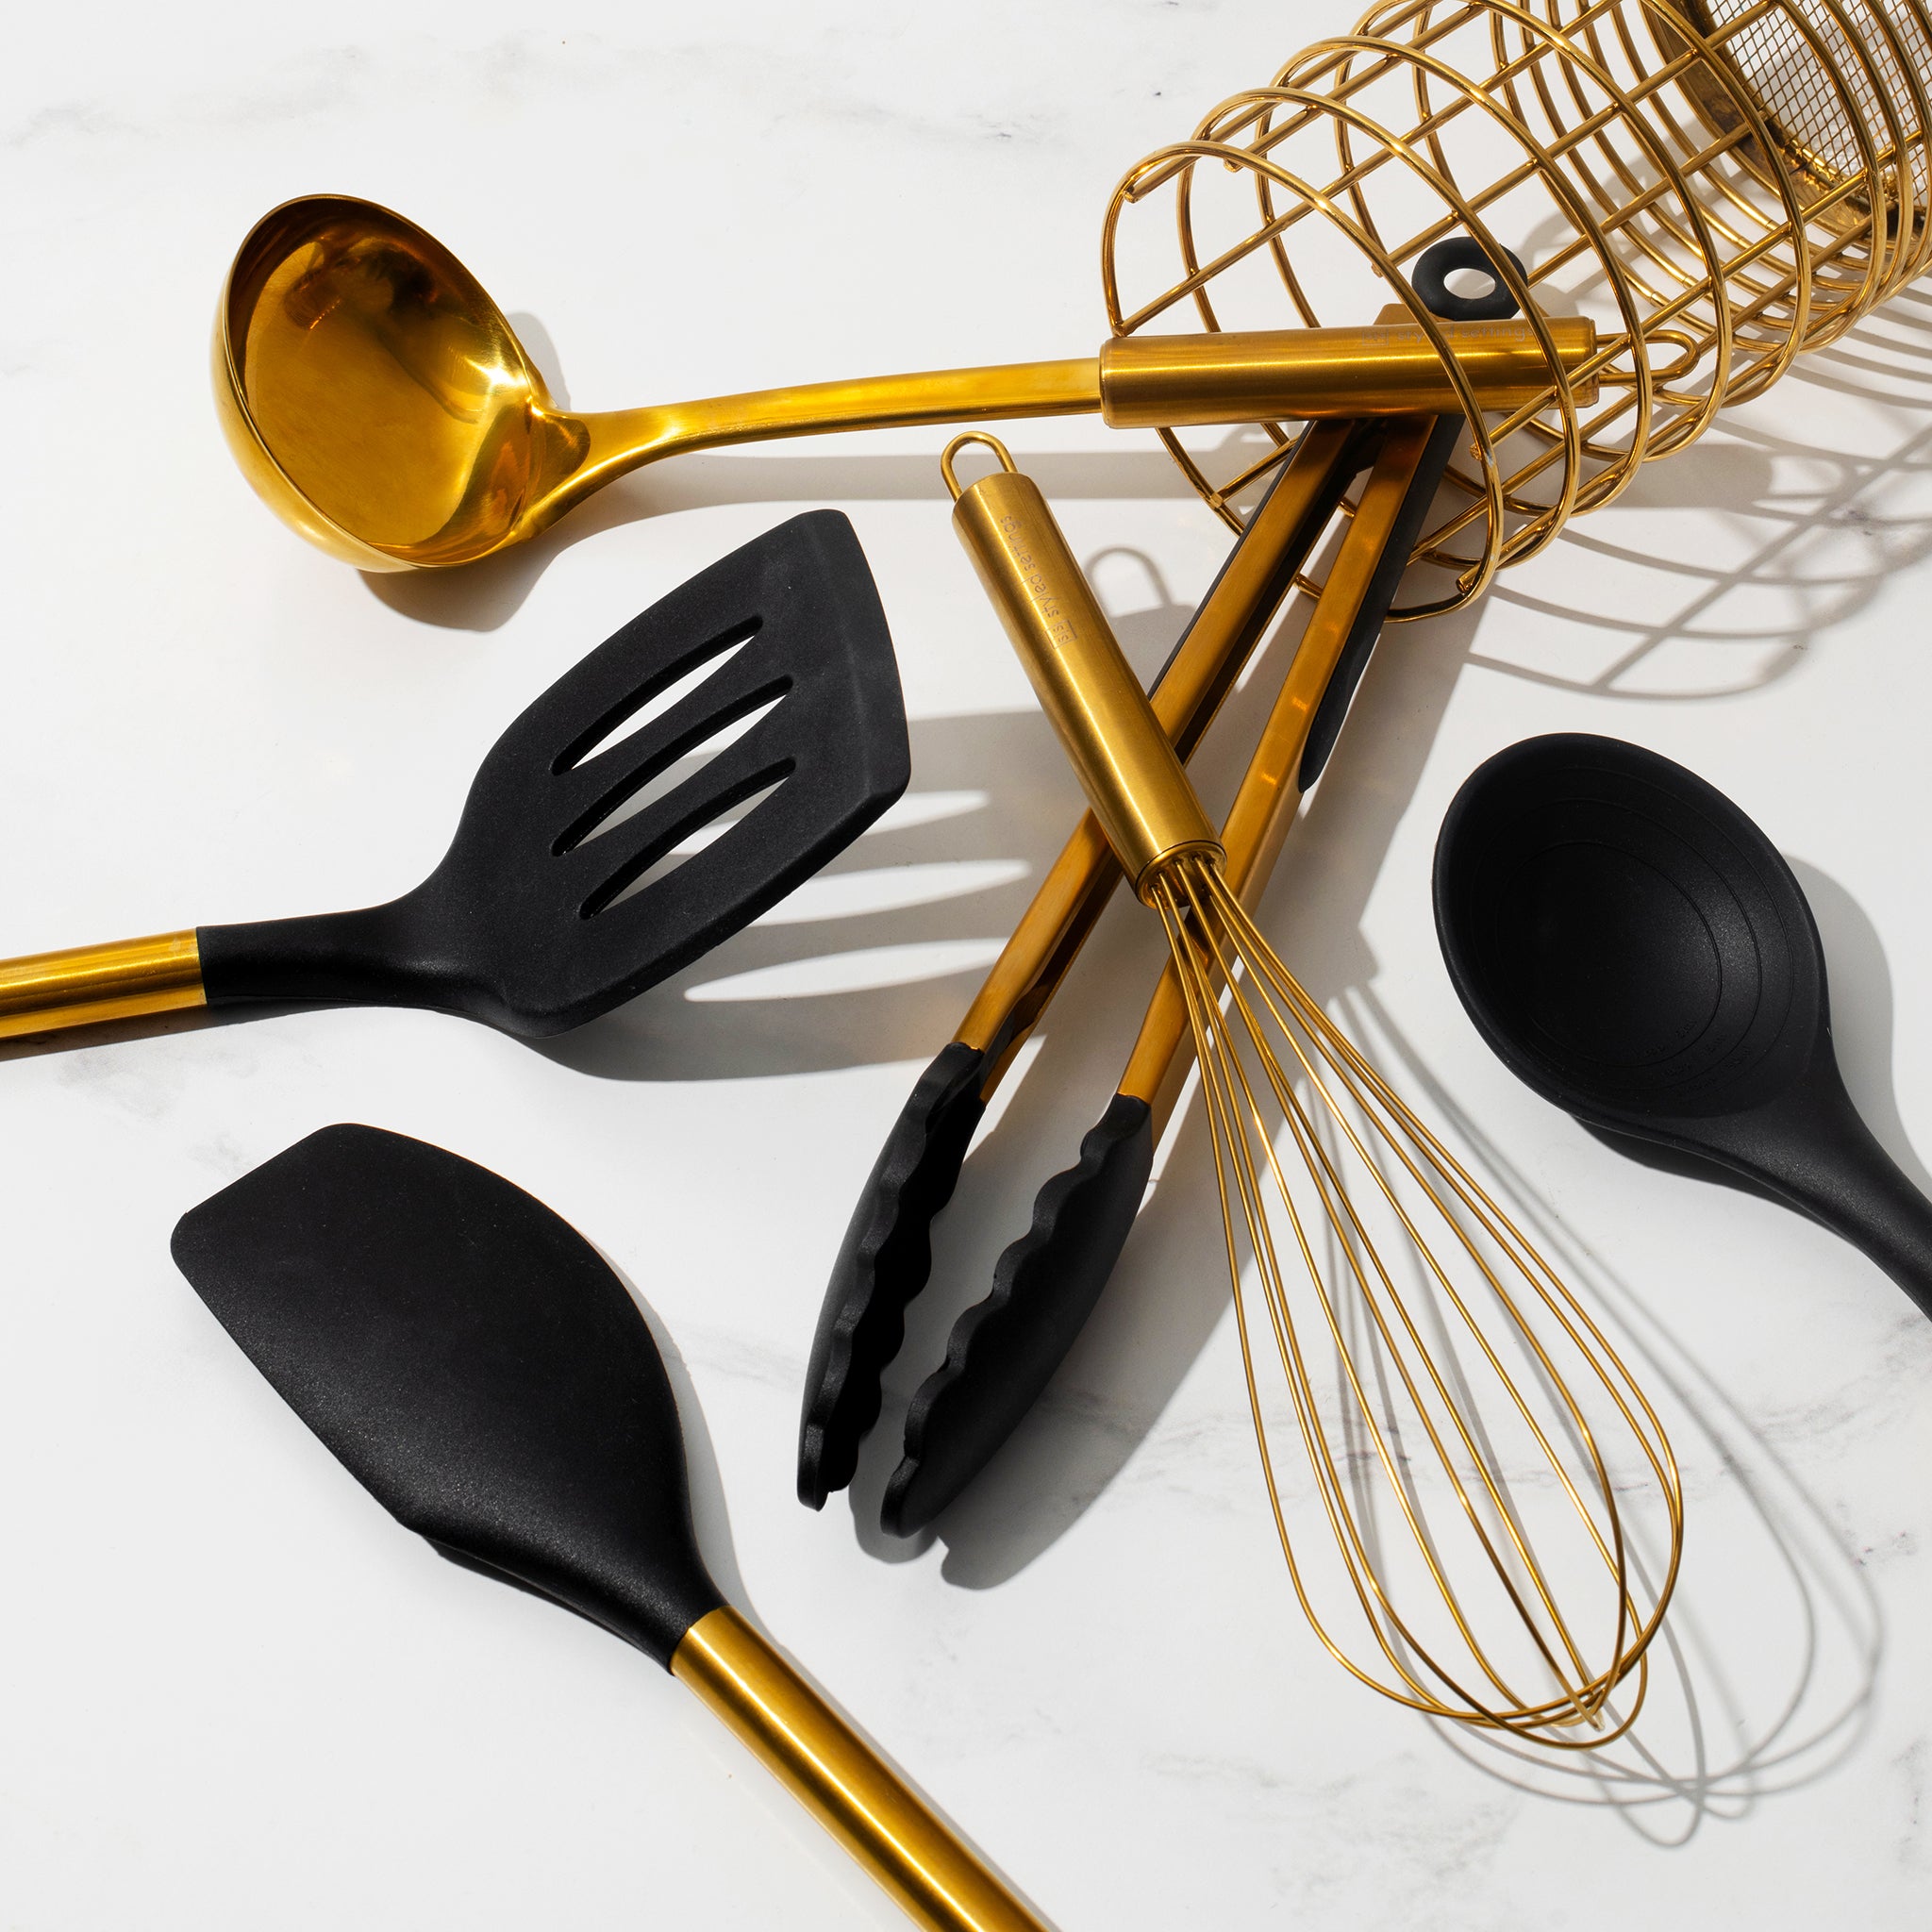 Black and Gold Kitchen Utensils Set with Holder - 7PC Gold Cooking Utensils  Set Includes Black Silicone Cooking Utensils Set and Gold Utensil Holder 